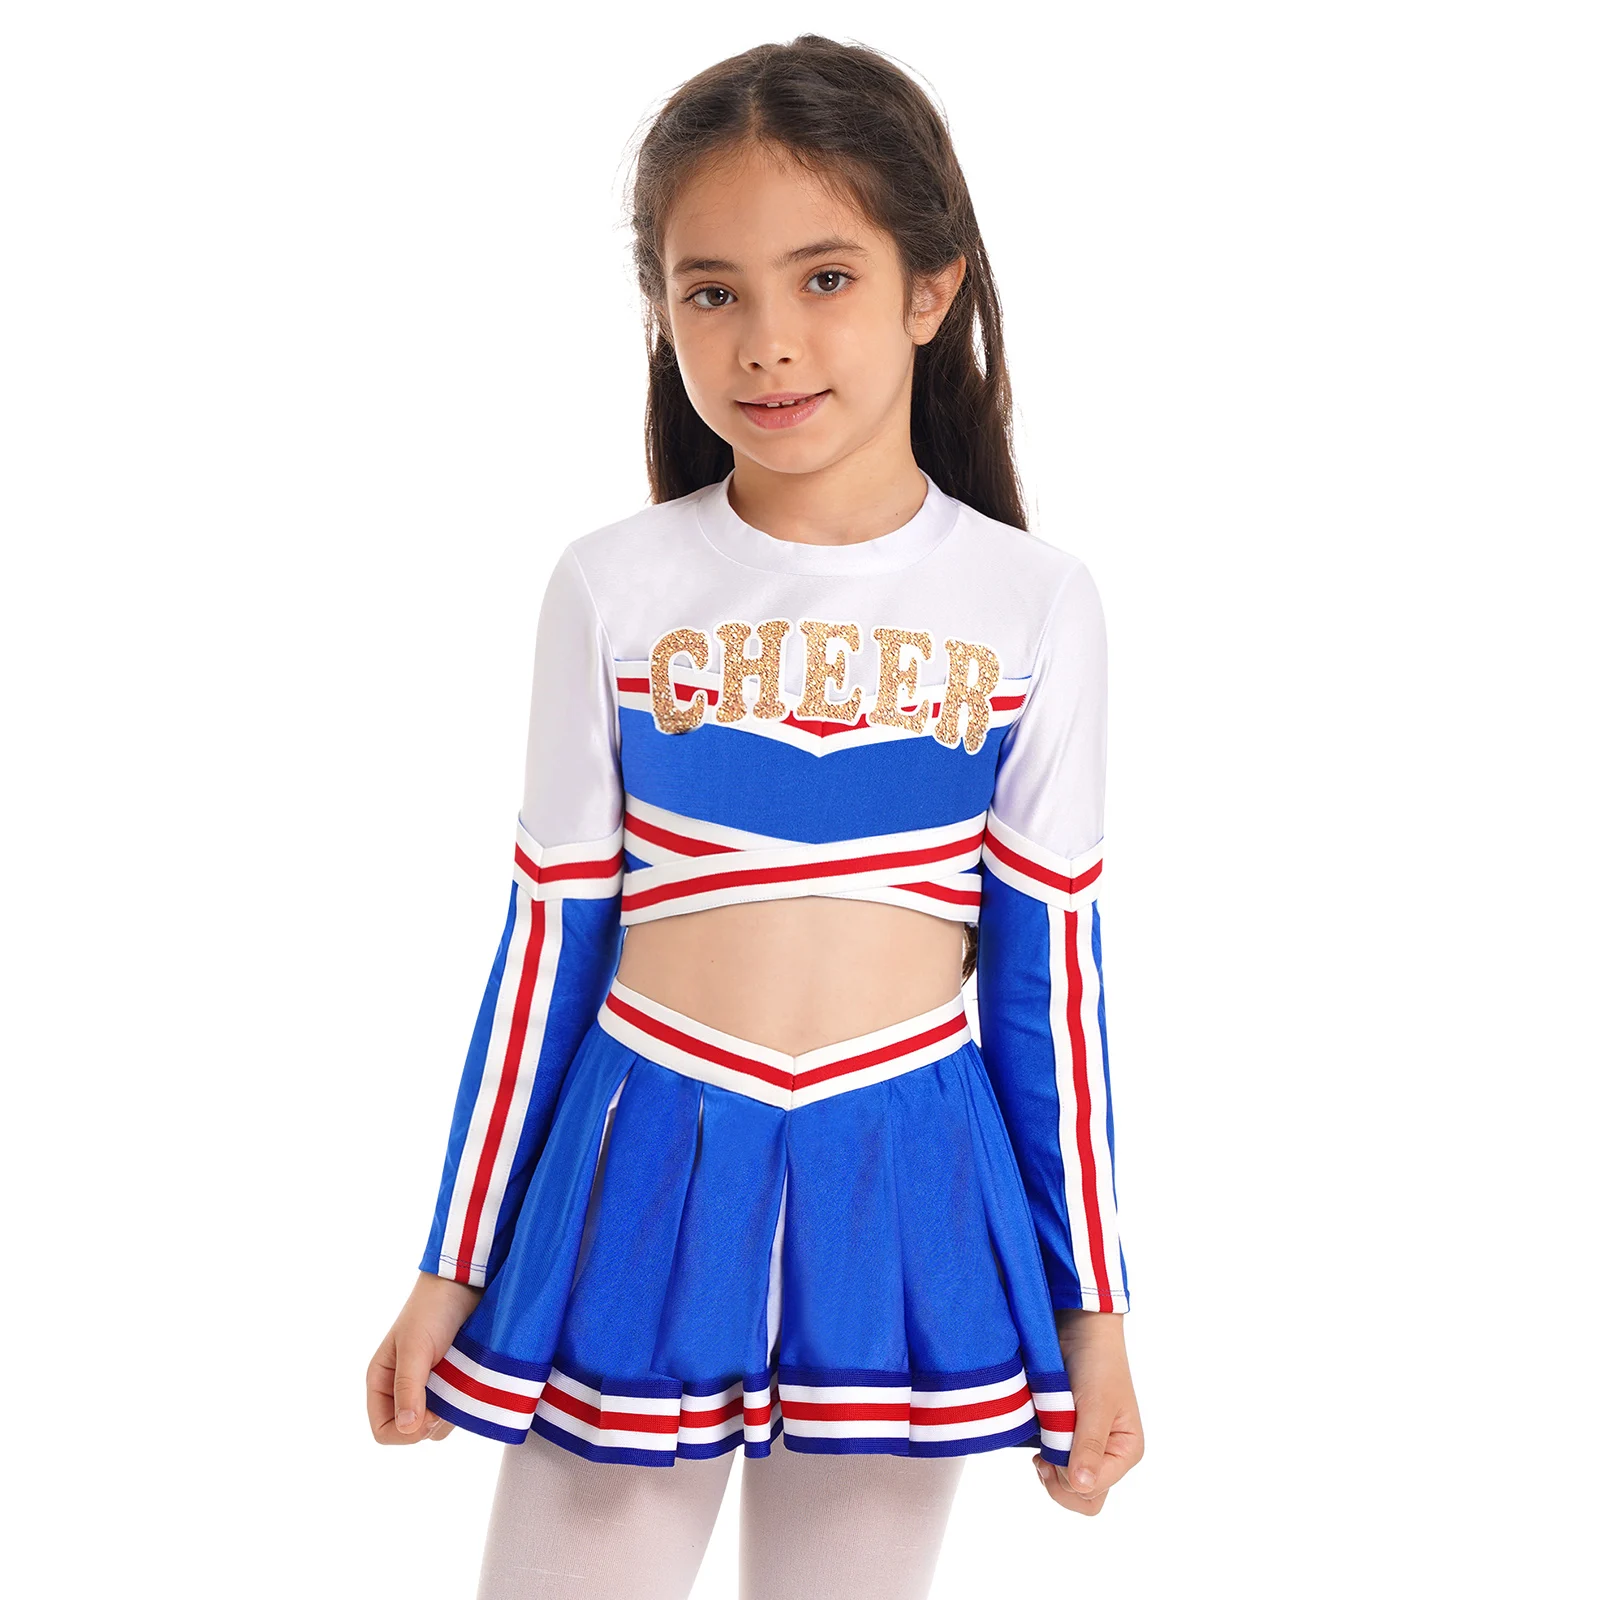 

Kids Girls Cheerleader Uniform Long Sleeve Mock Neck Cheers Printed Tops with Pleated Skirt Set Cheerleading Dance Costume